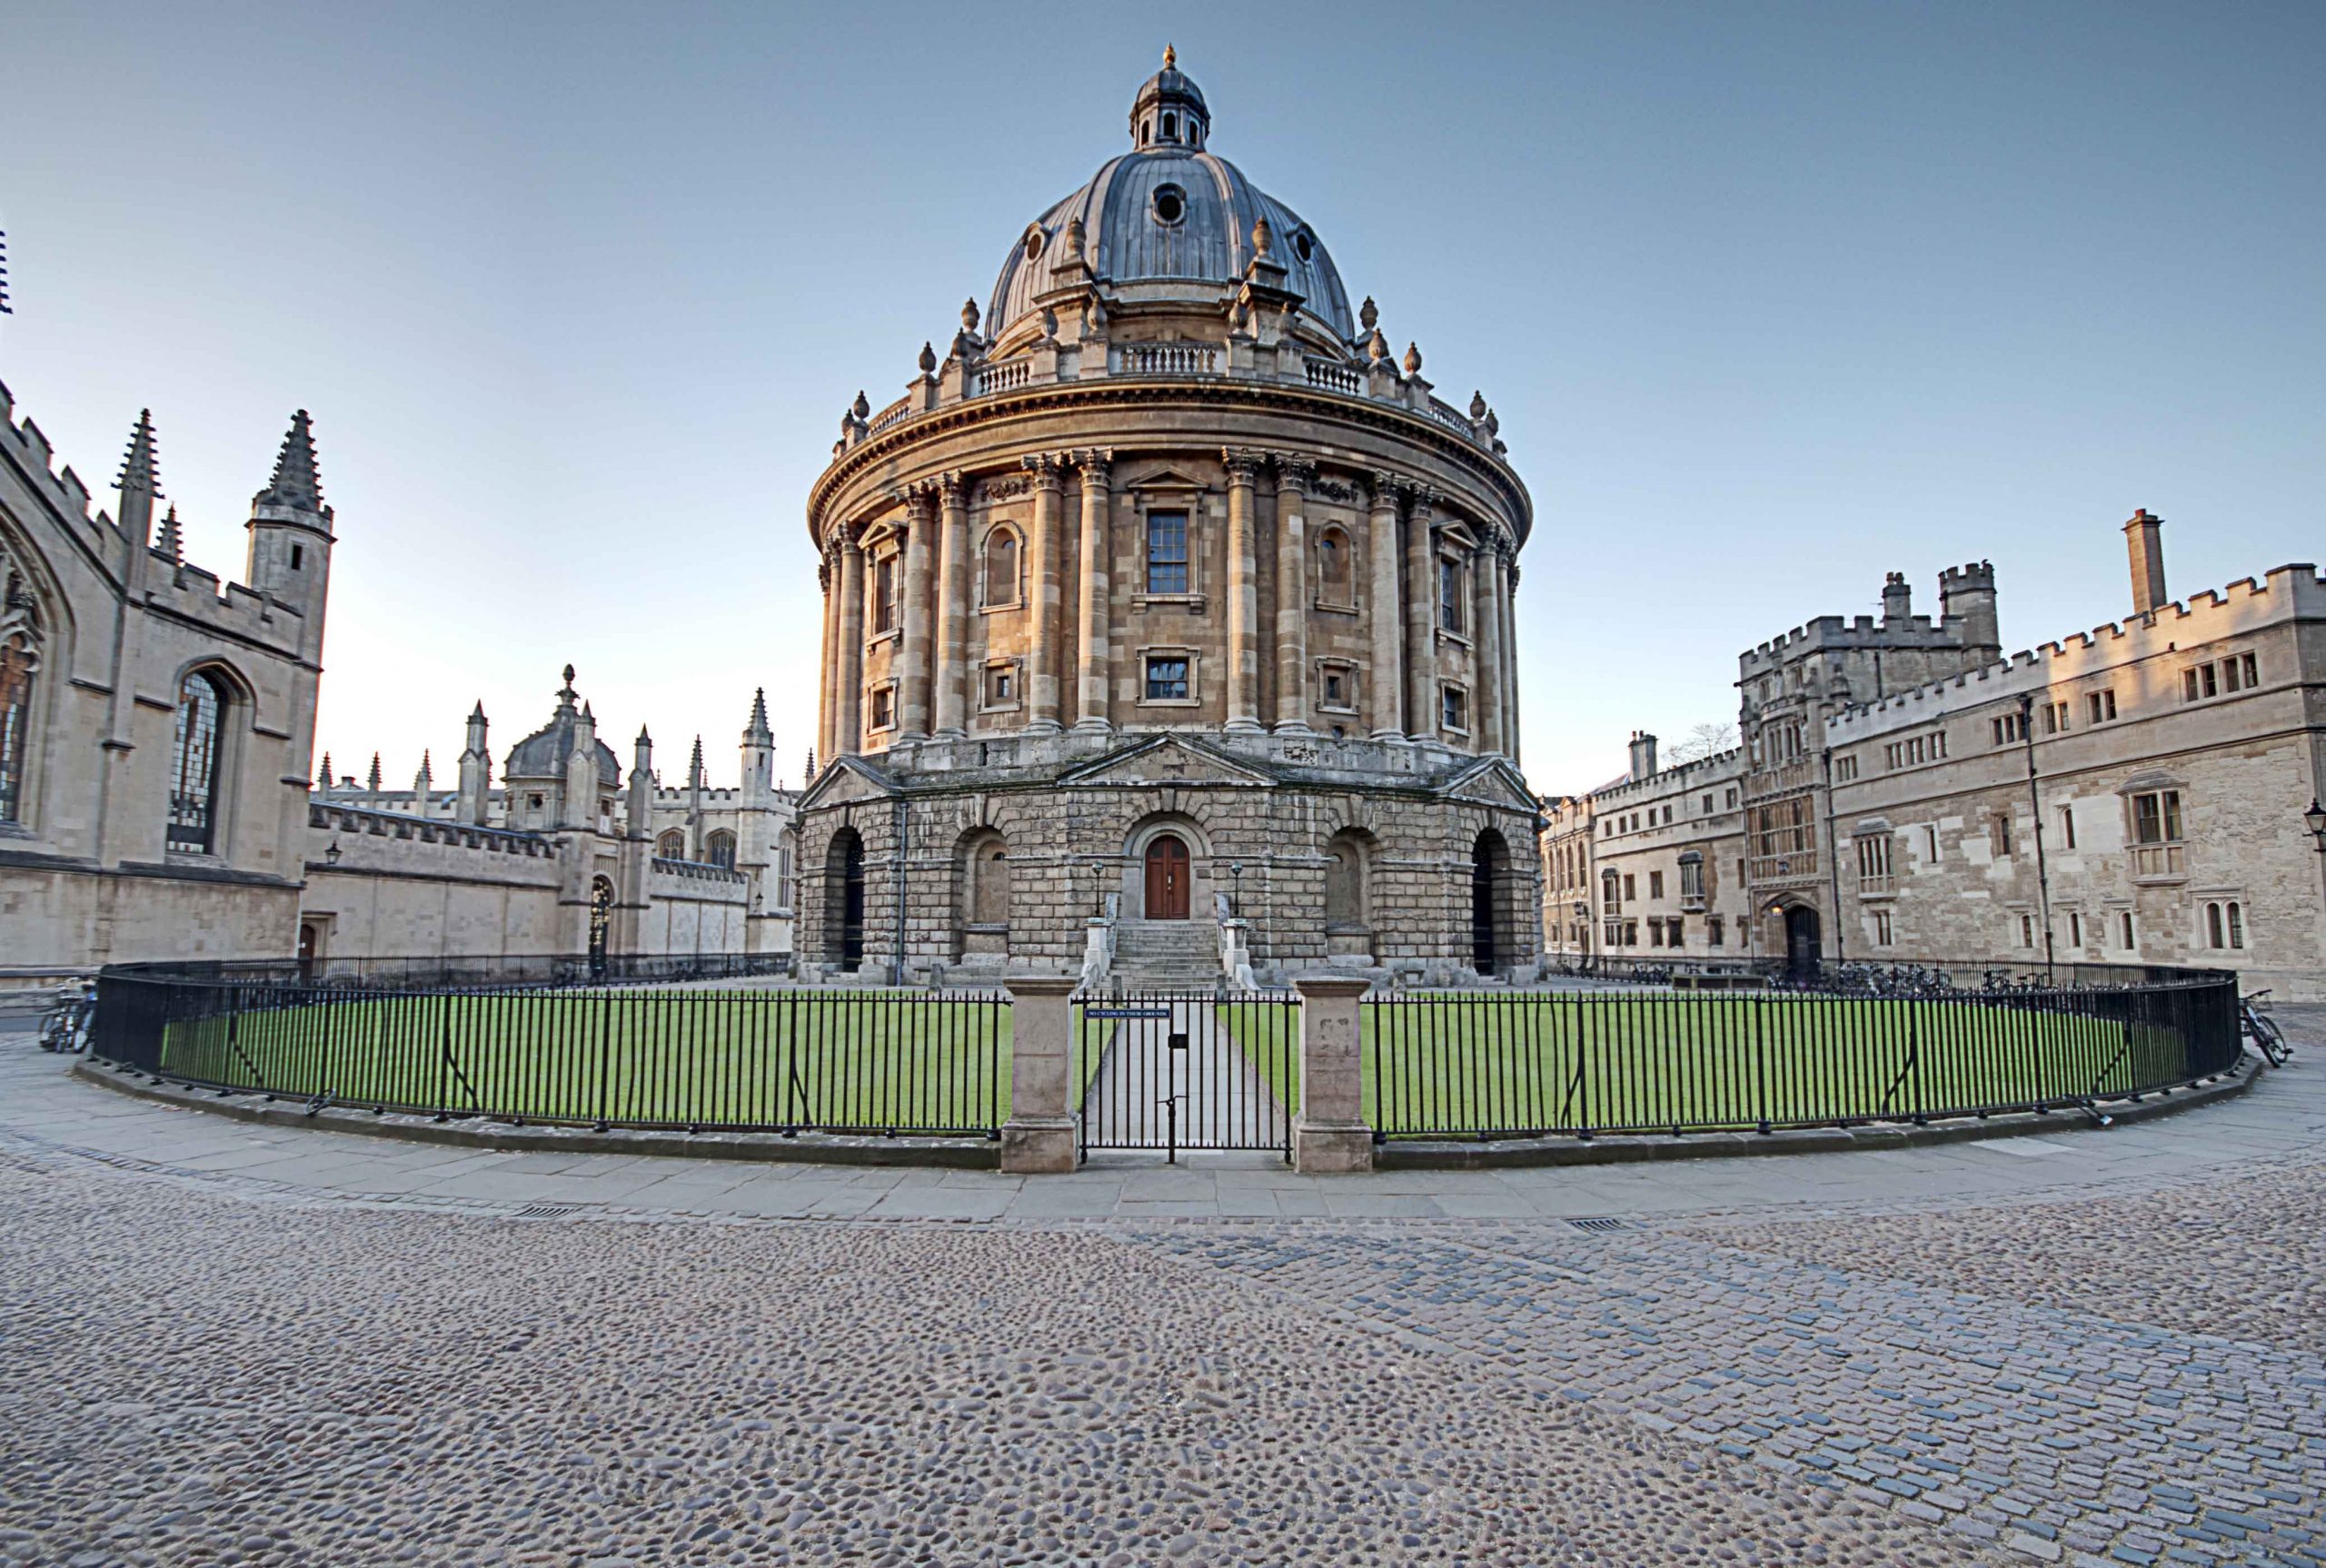 Oxford photograph.